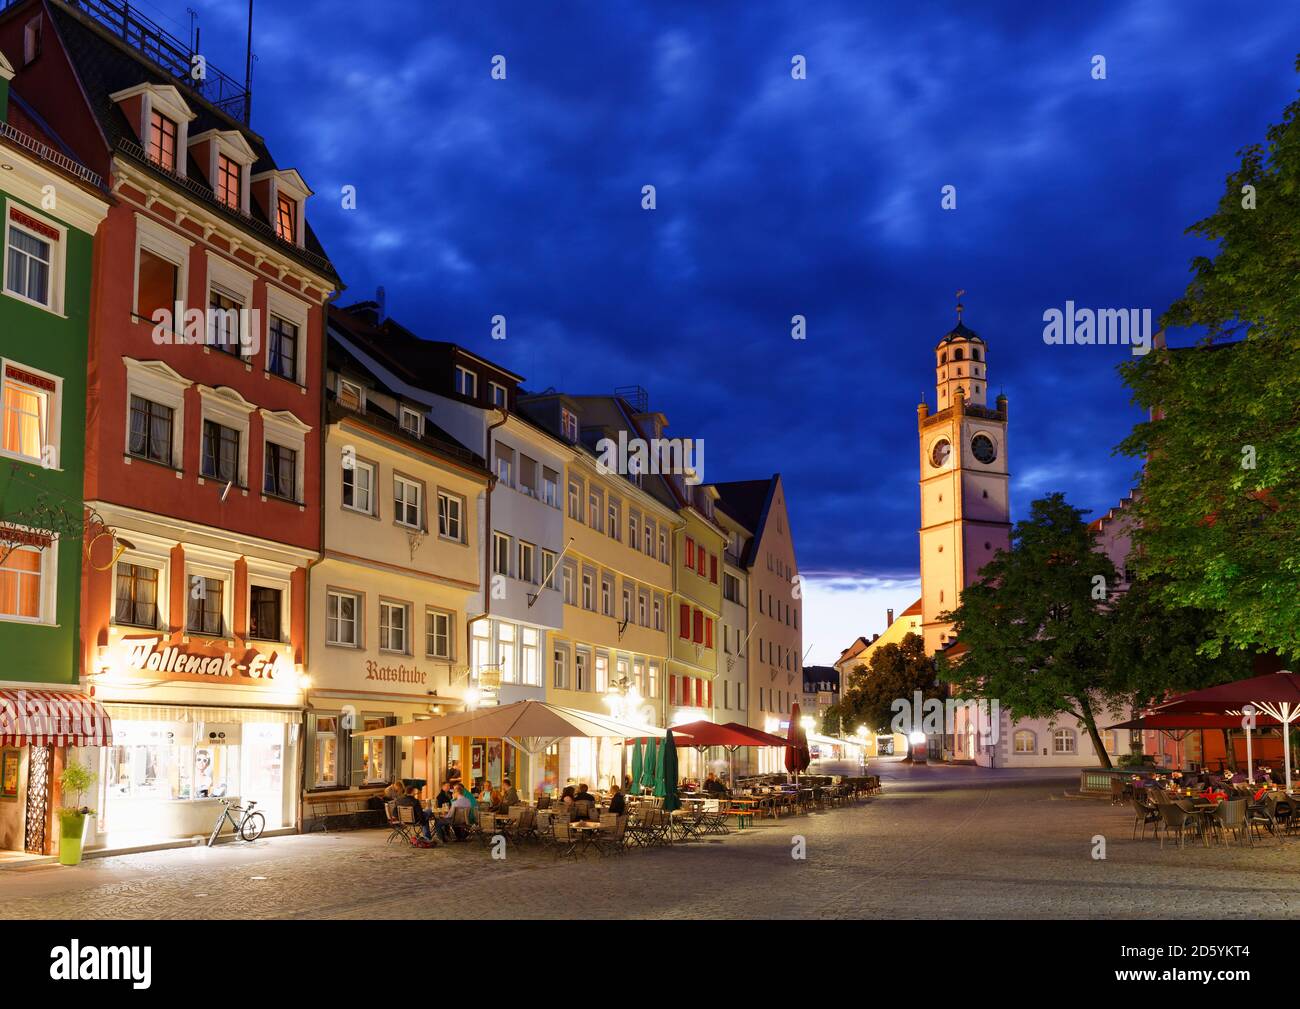 Germania Baden-Wuerttemberg, Ravensburg, Marienplatz con Blaserturm nella città vecchia Foto Stock